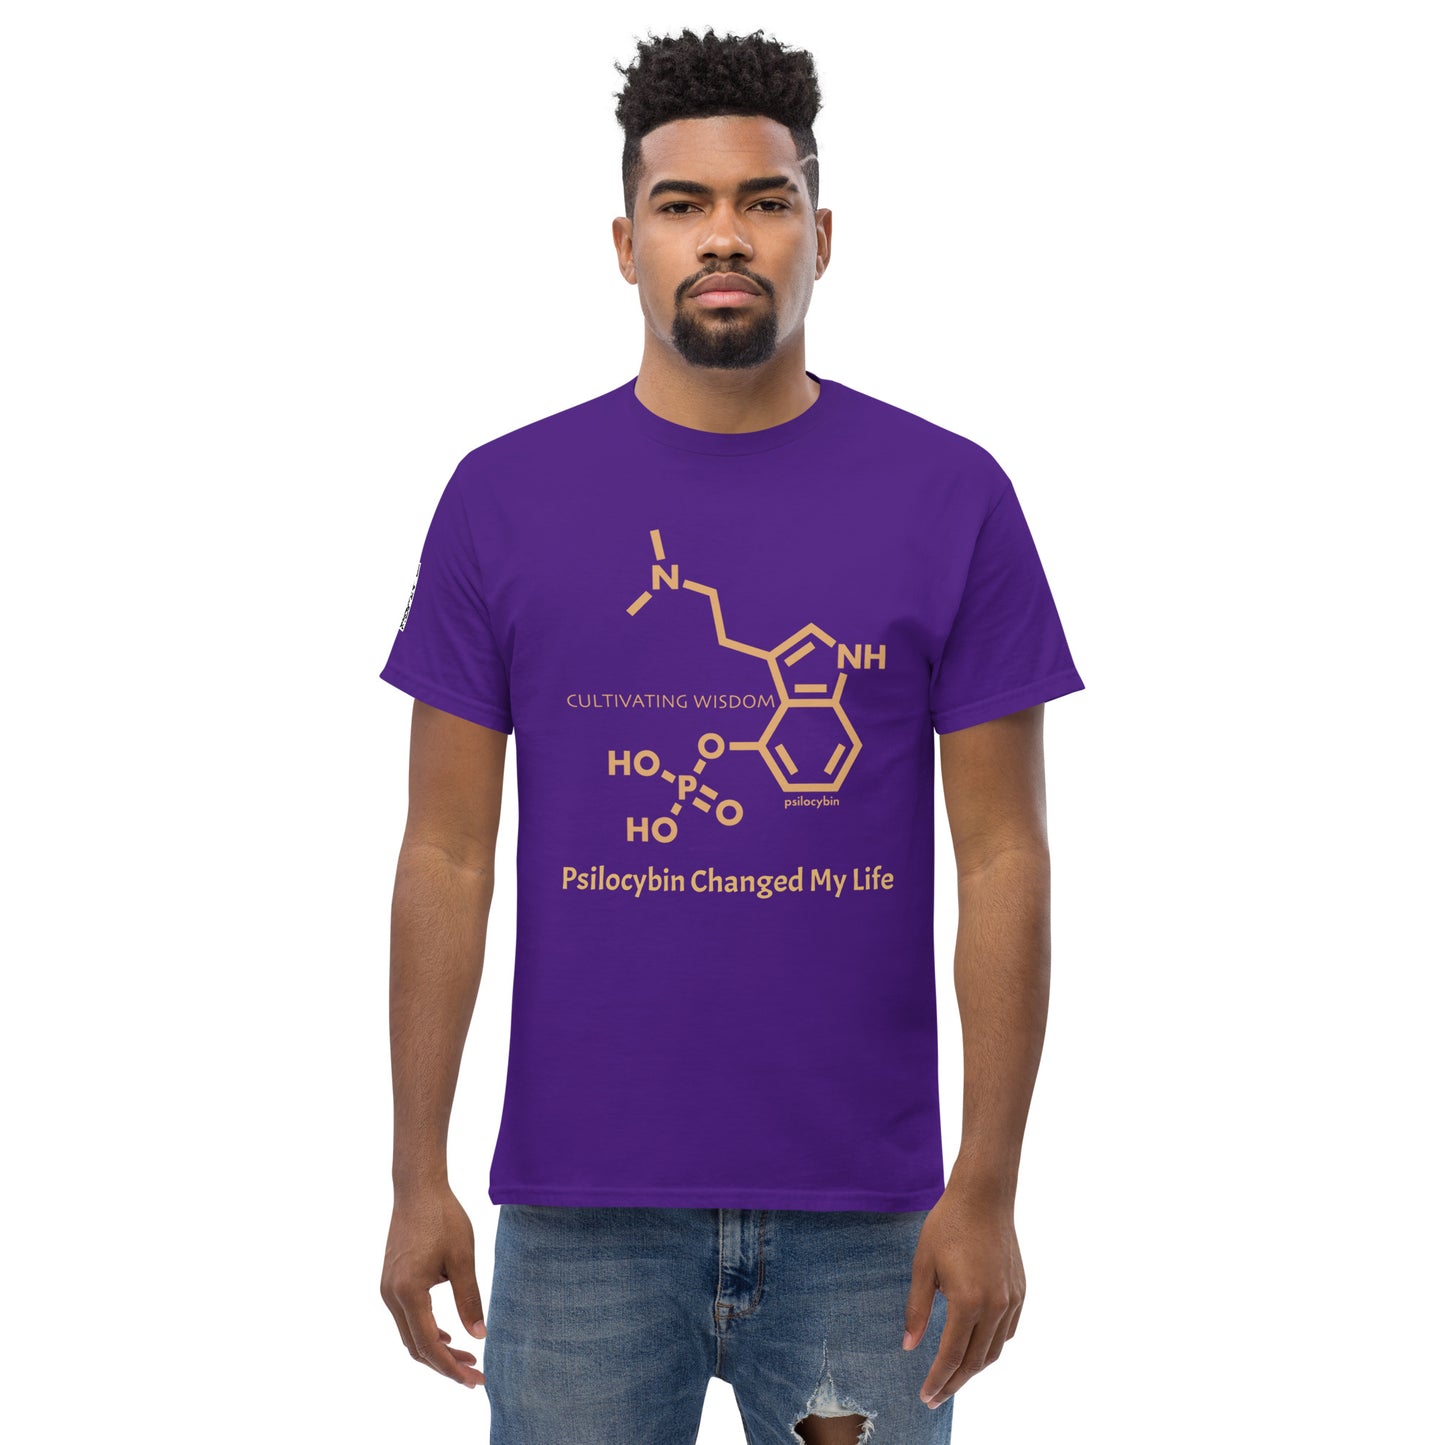 Psilocybin Changed My Life t-shirt